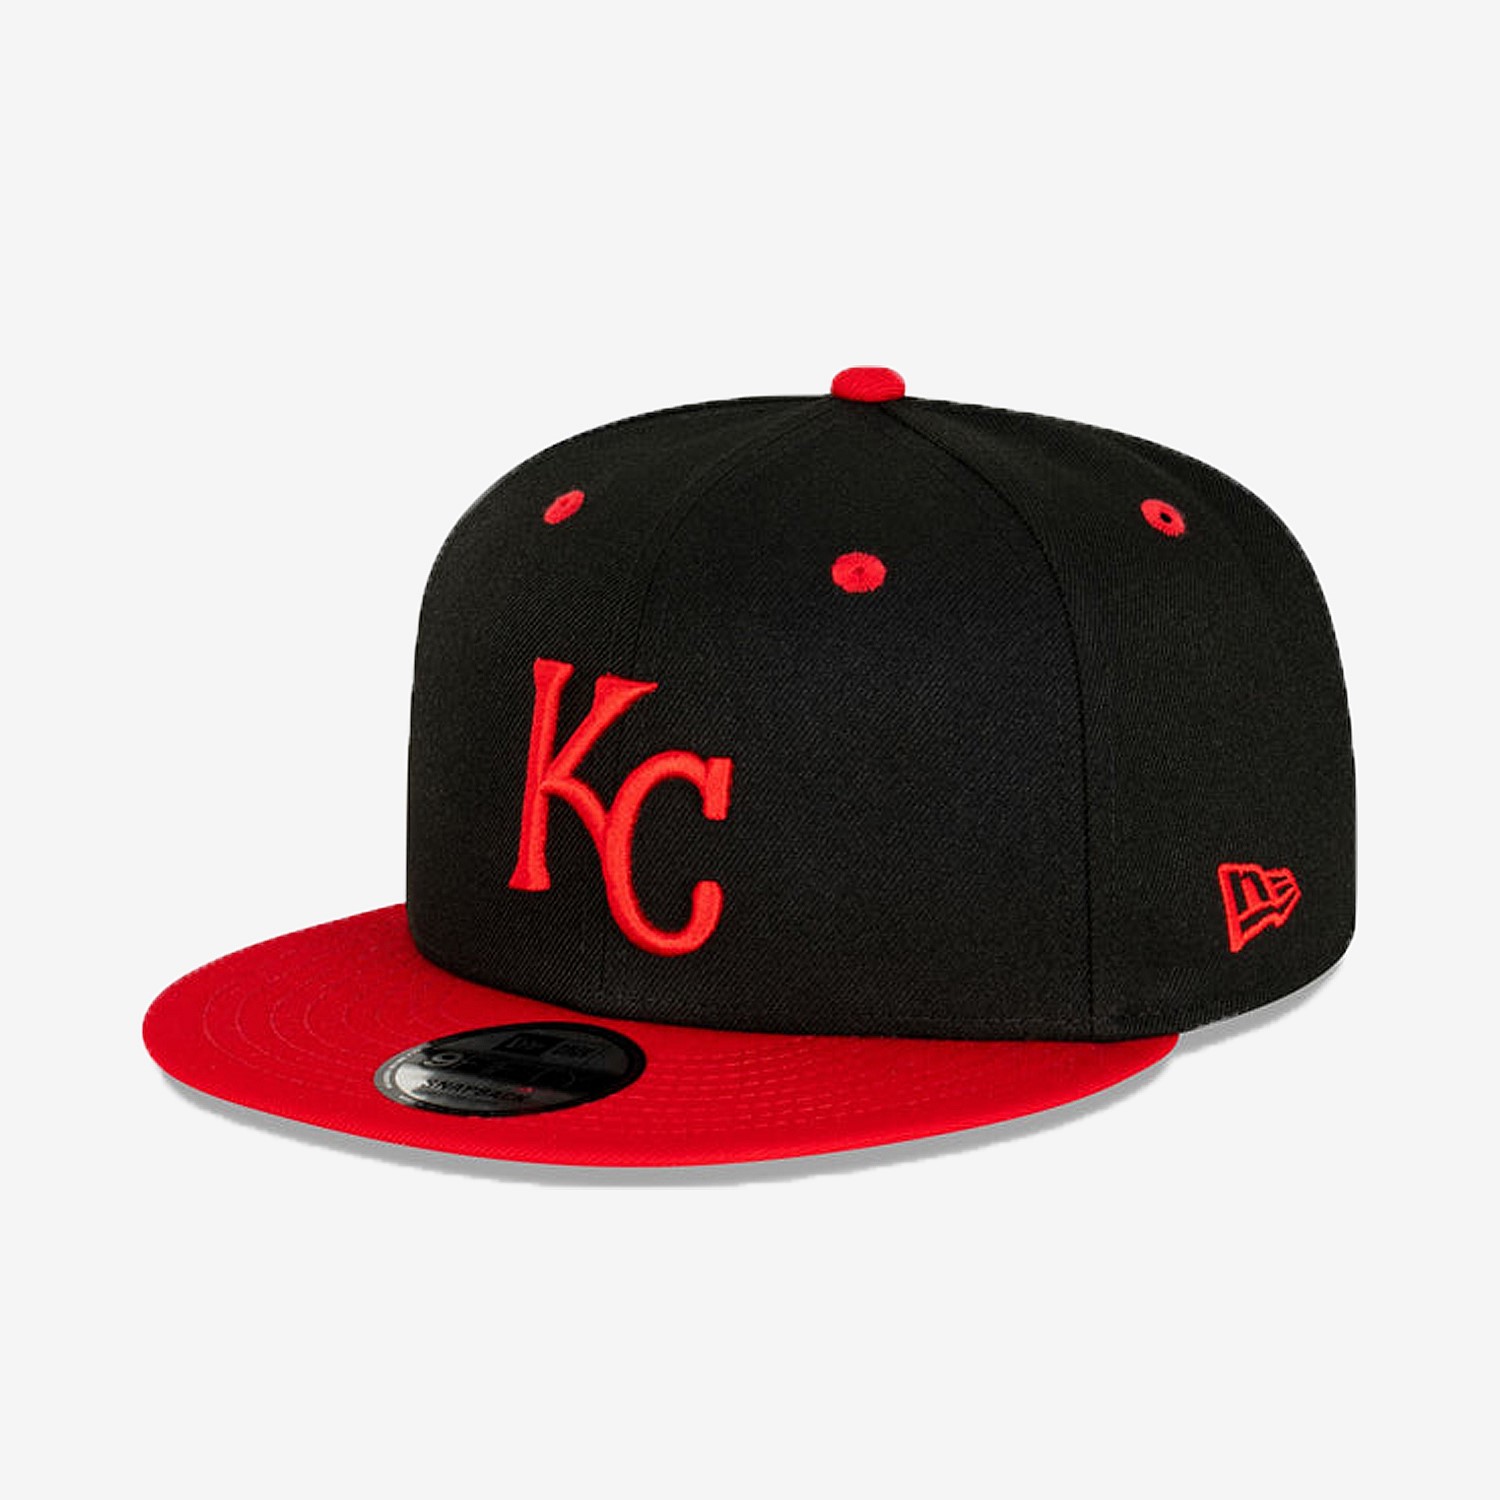 New Era 950 Chilli Black | | Kansas Cap Caps City Stirling Sports Hats & Royals